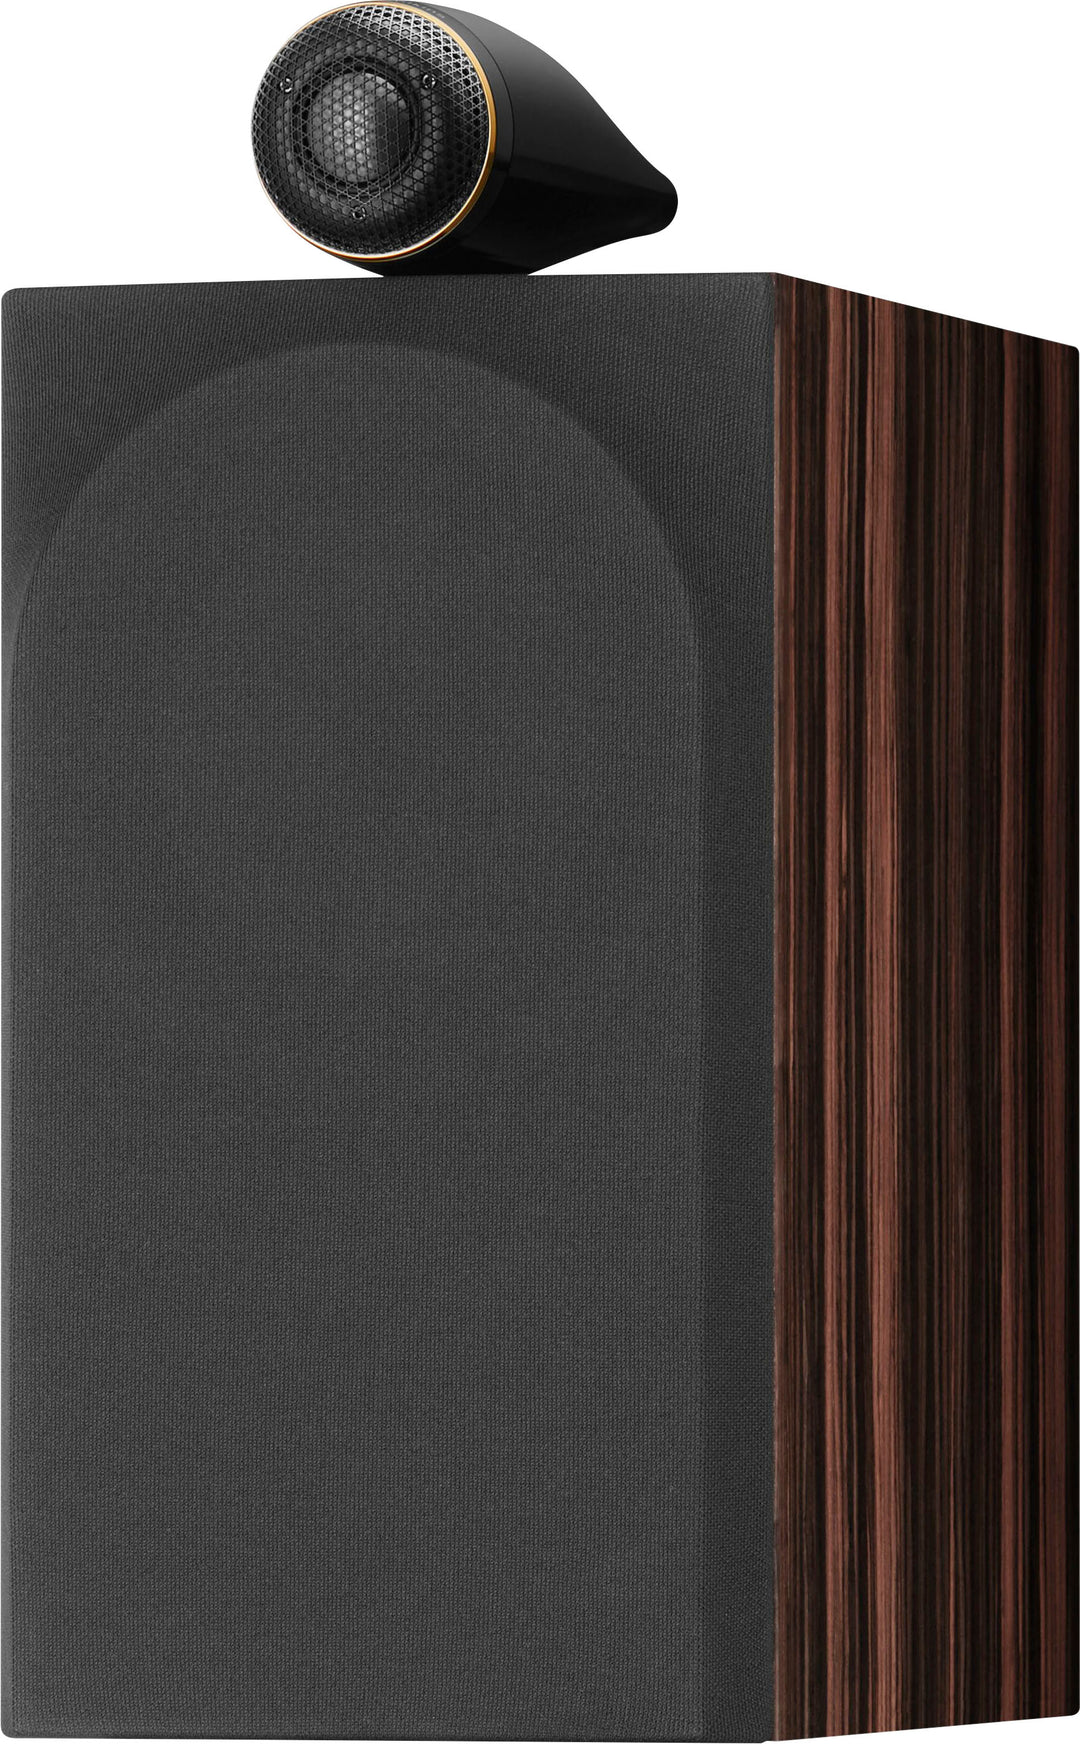 Bowers & Wilkins - 700 Series 3 Signature Bookshelf Speaker with 1" Tweeter on Top and 6.5" Midbass (Pair) - Datuk Gloss_9